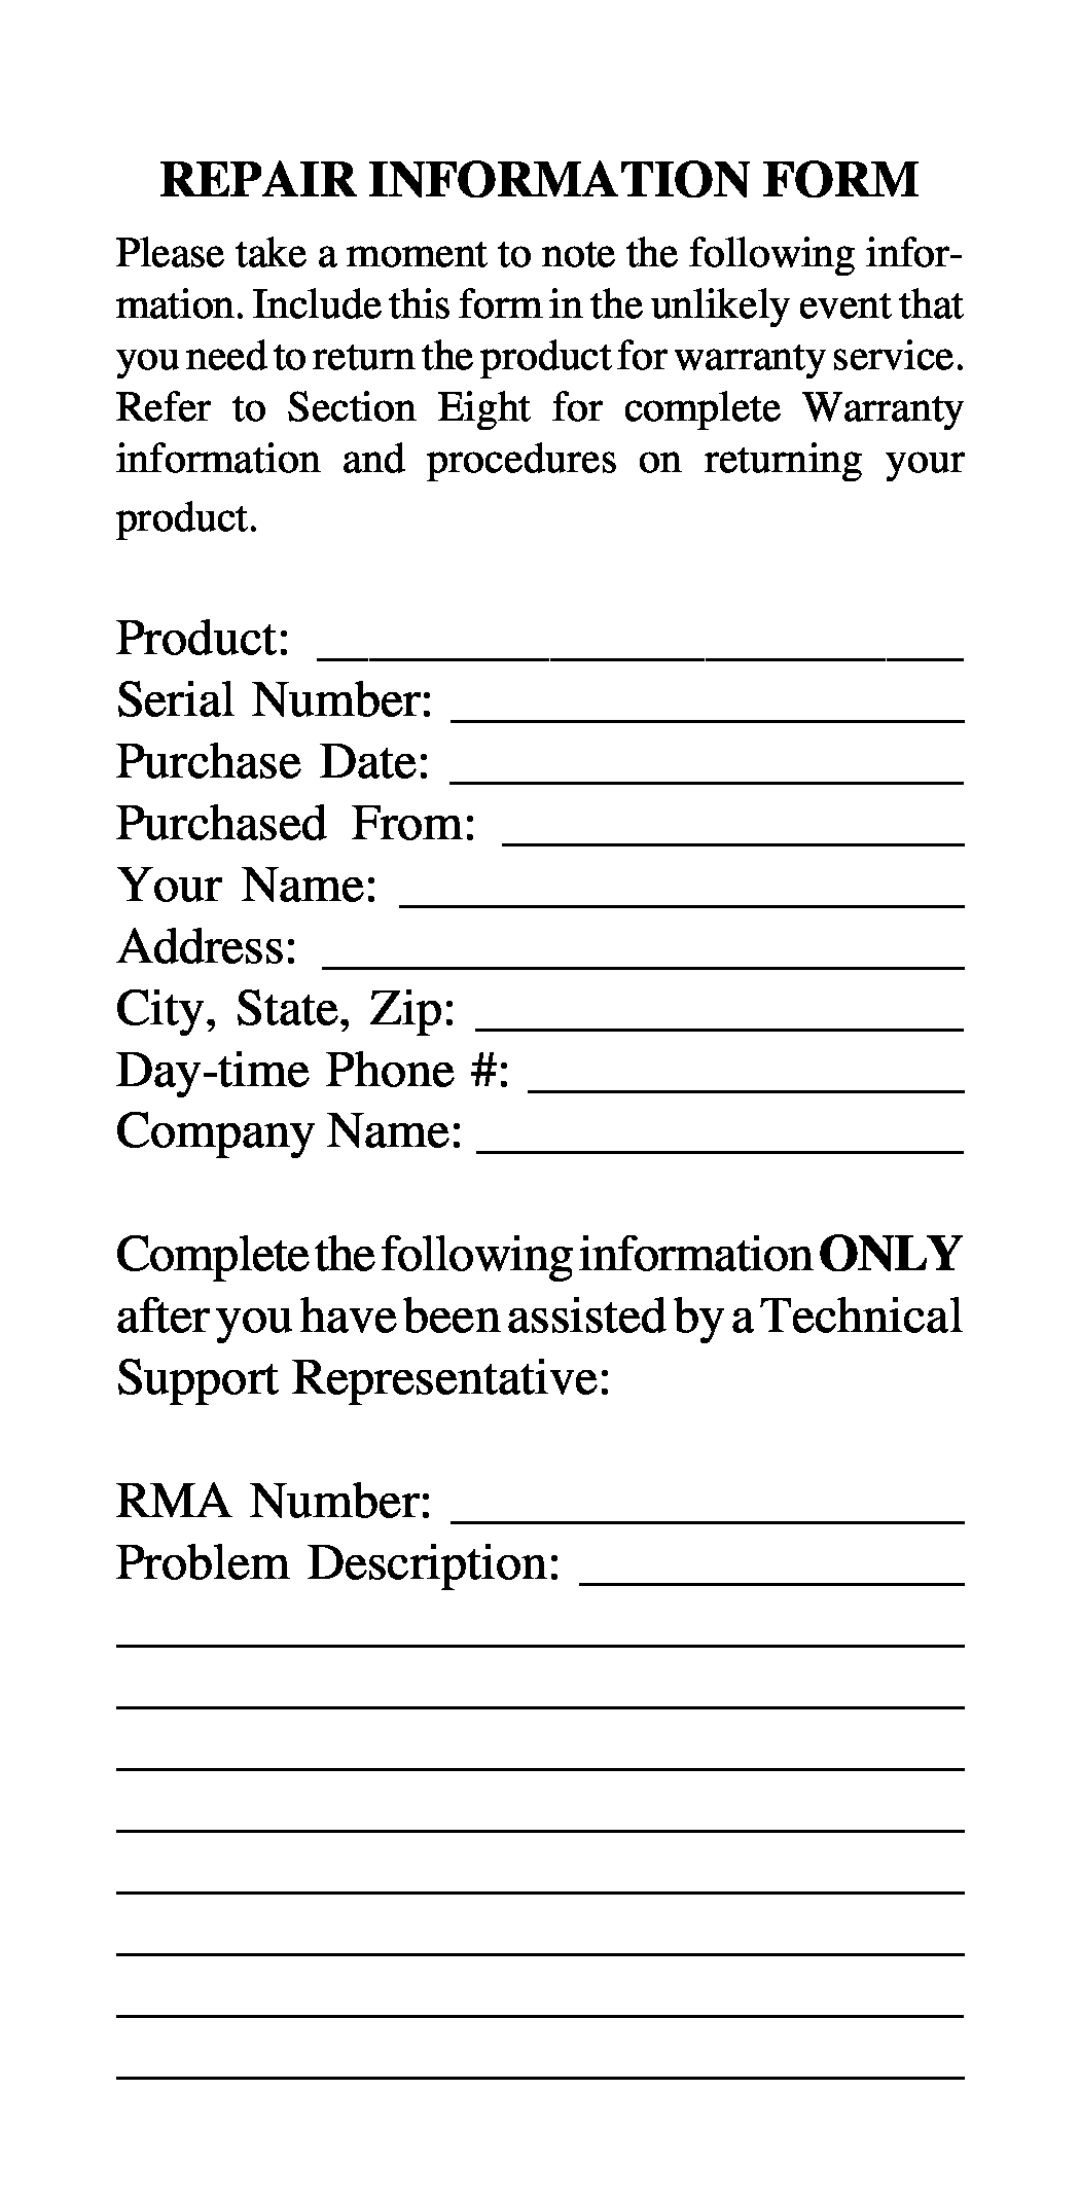 MaxTech PCN2000 Series manual Repair Information Form 